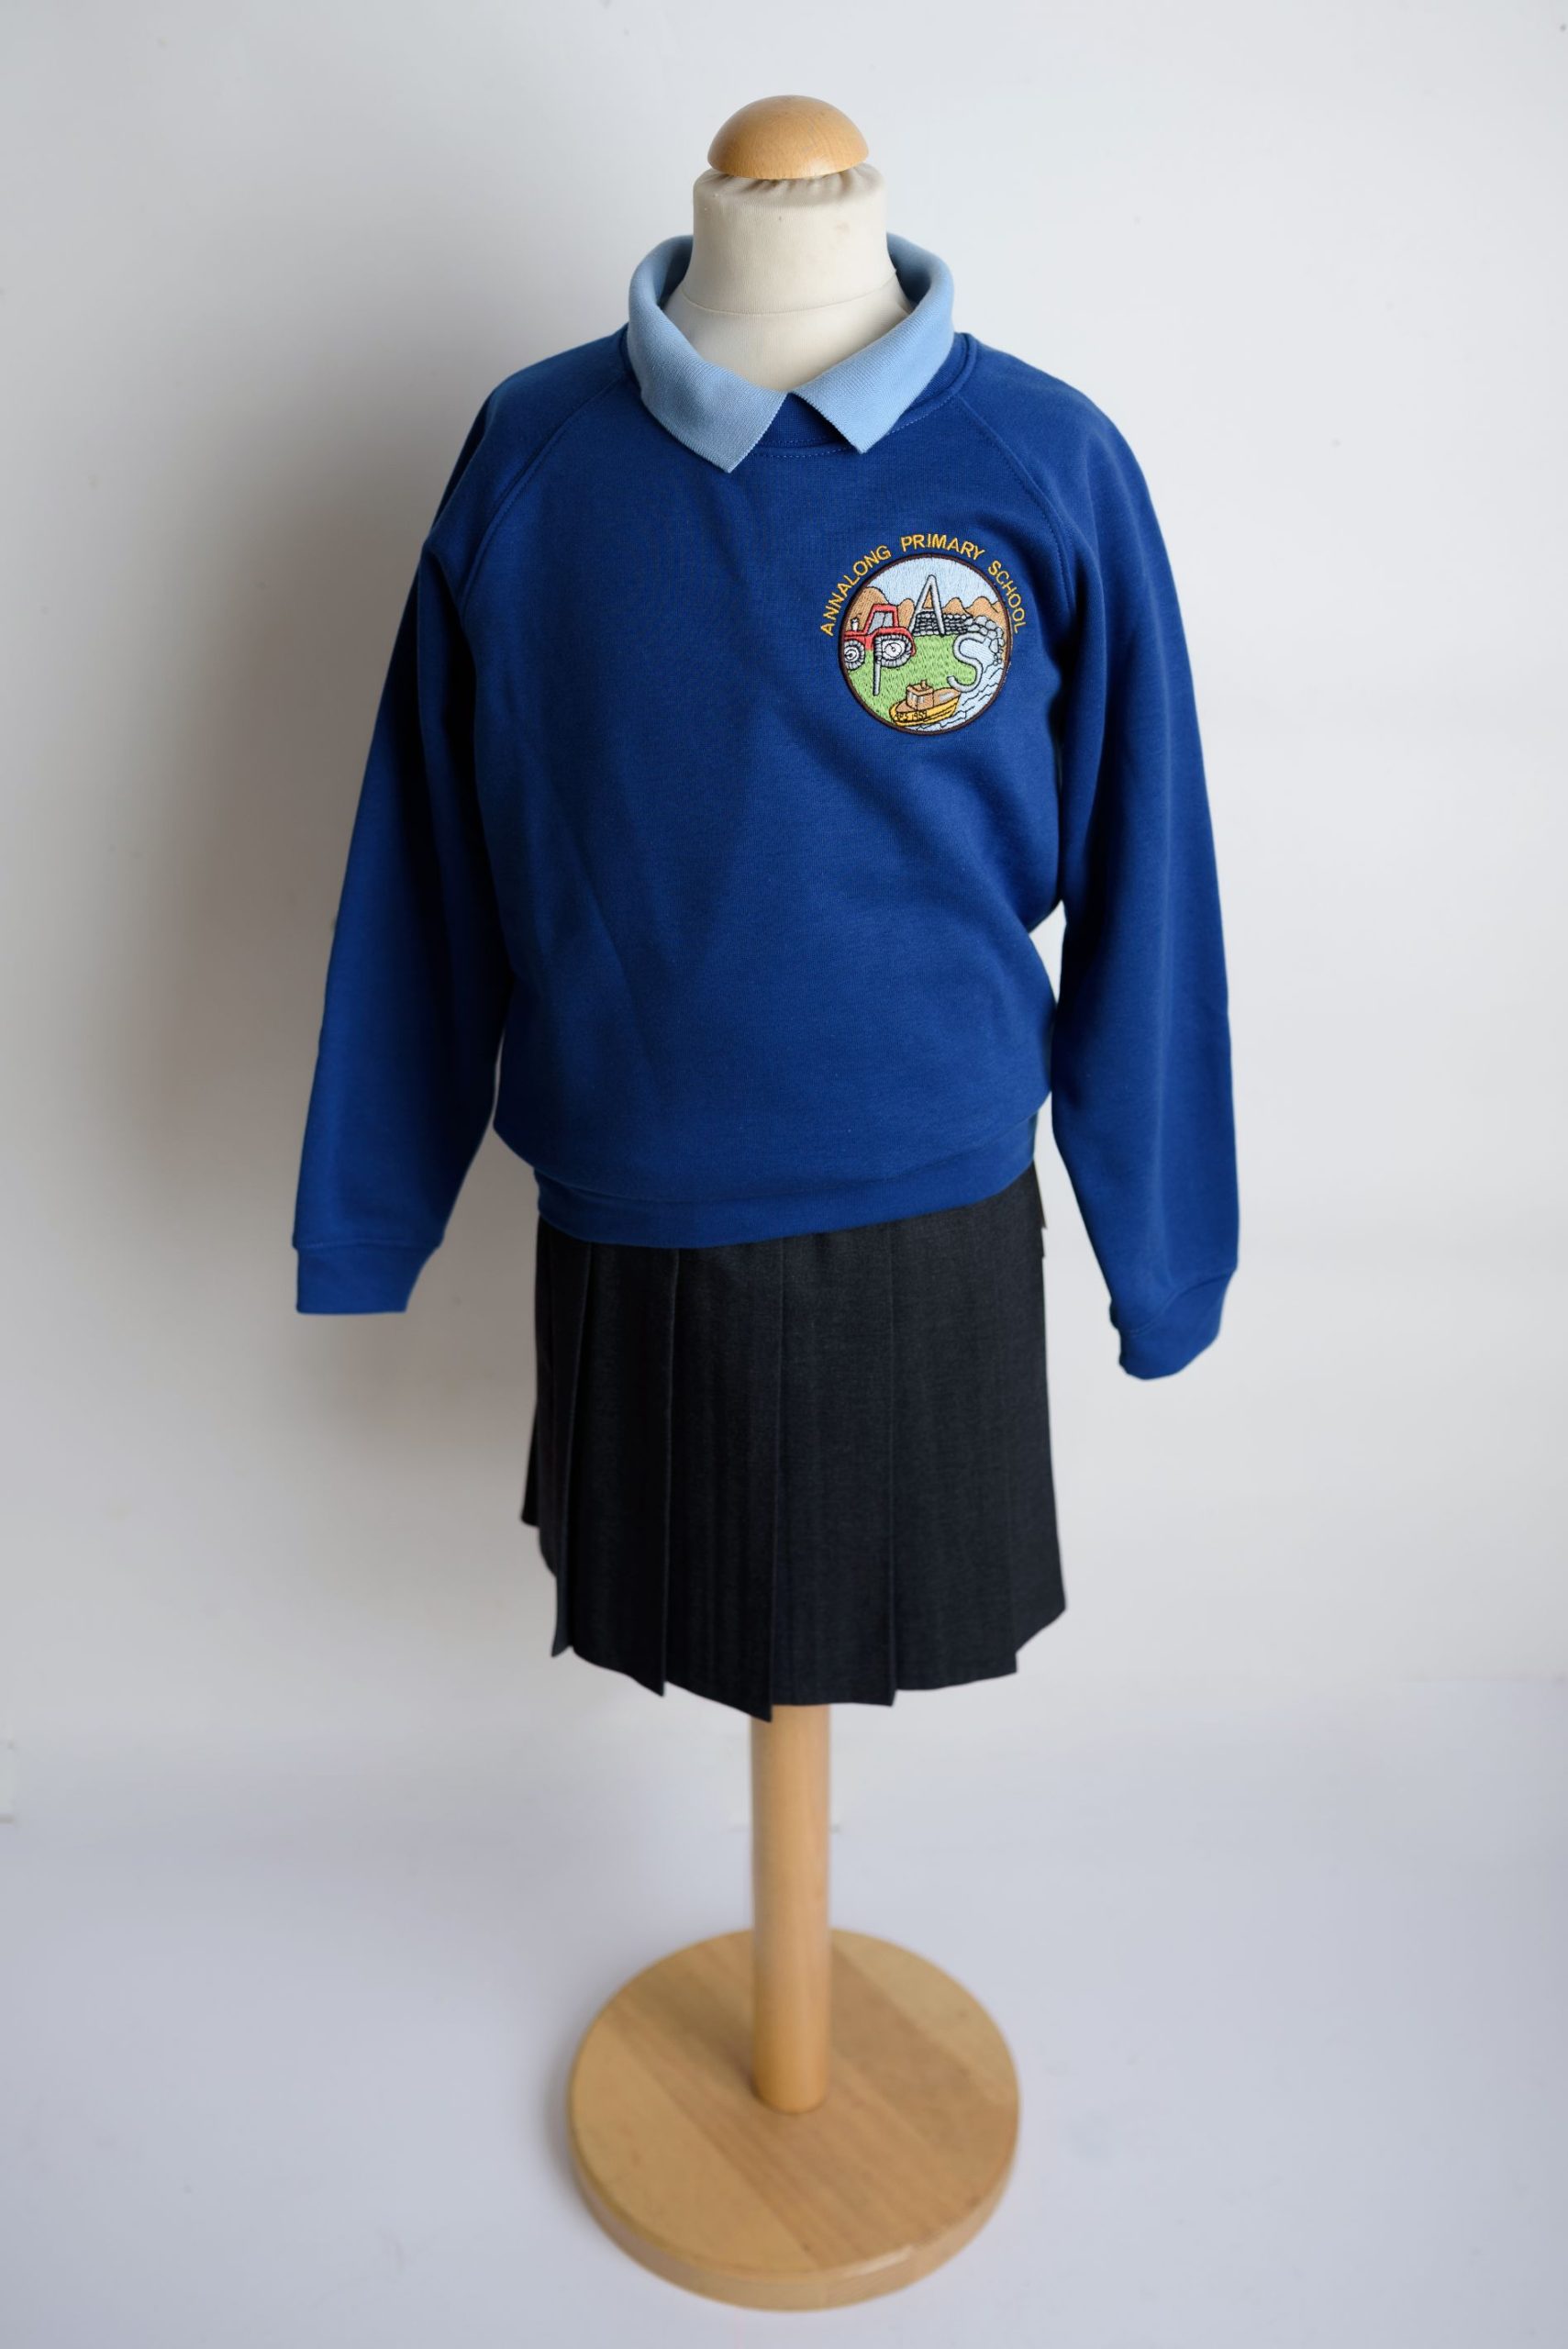 Annalong Primary School Girls Uniform